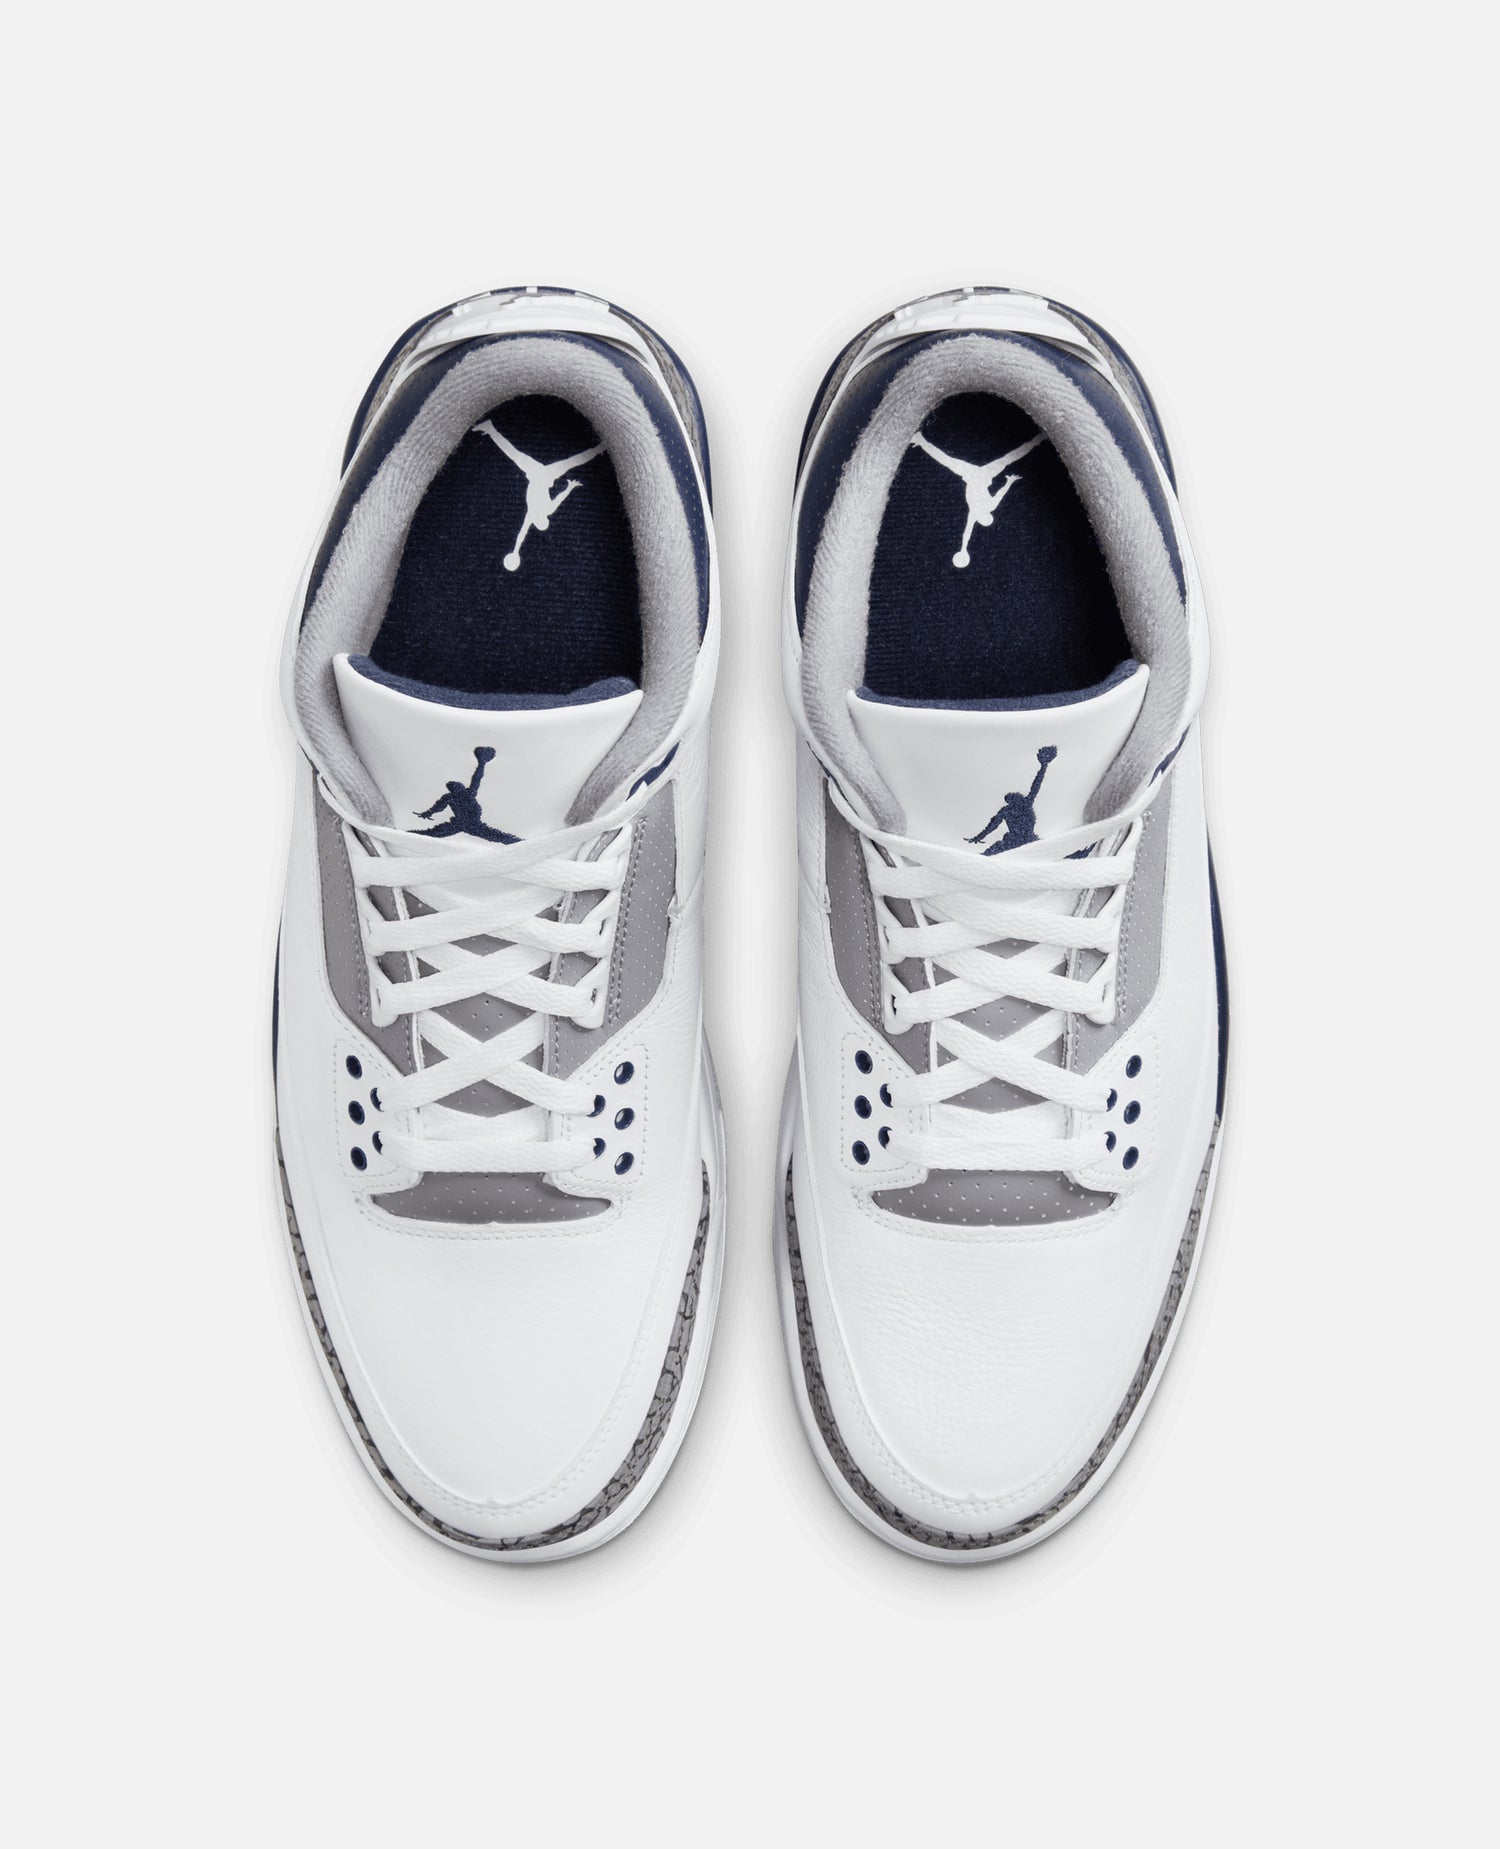 Nike Air Jordan 3 Retro (White/Midnight Navy-Cement Grey-Black)